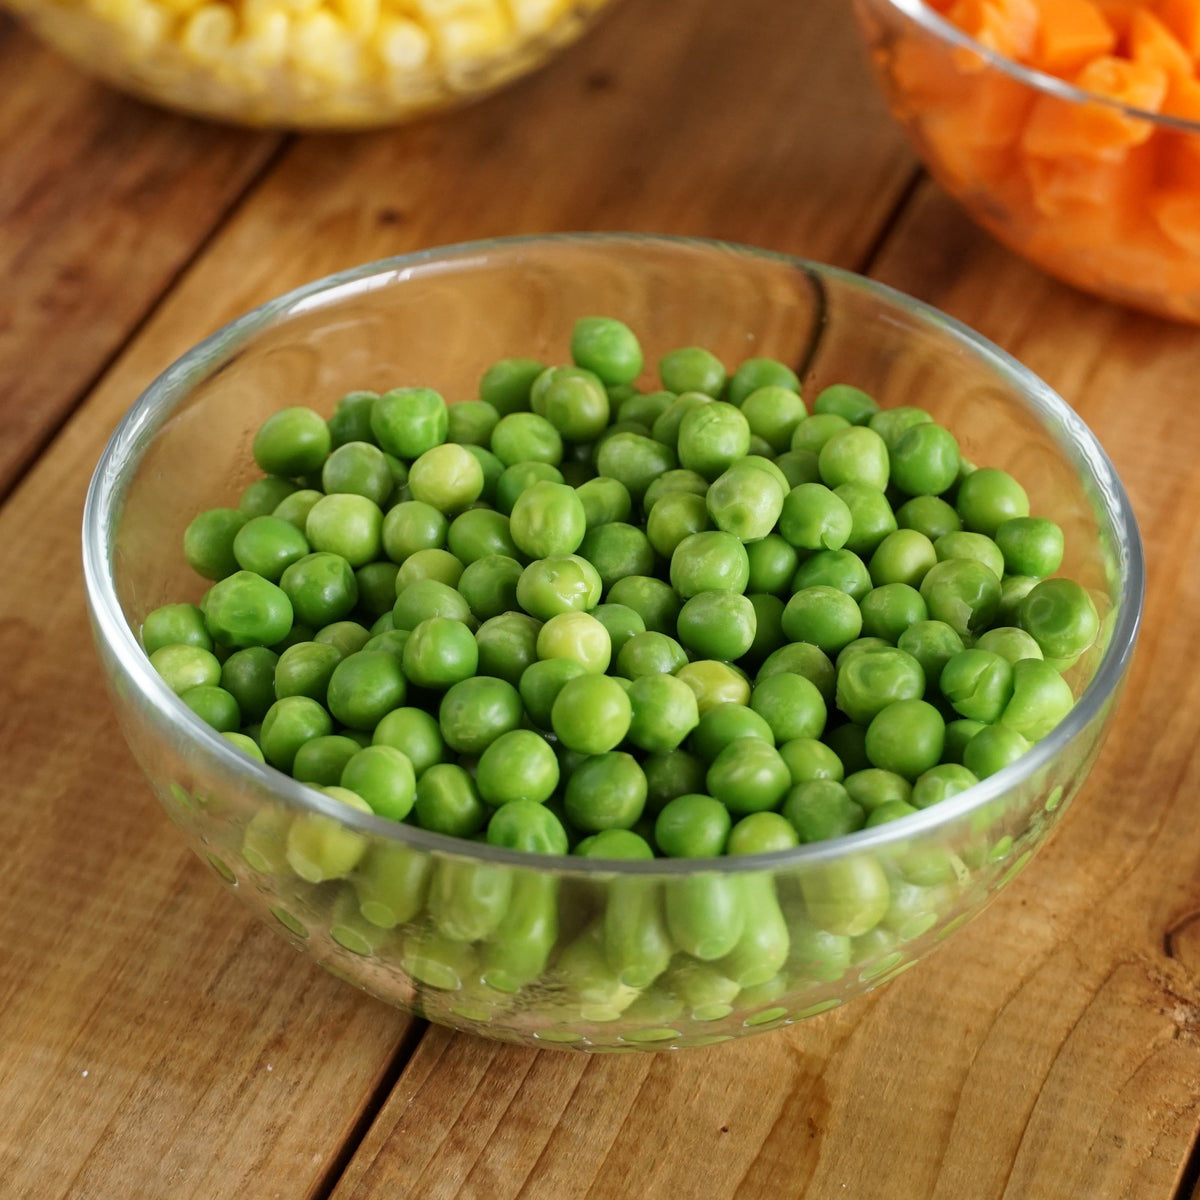 Certified Organic Frozen Peas from Spain (2.5kg) - Horizon Farms